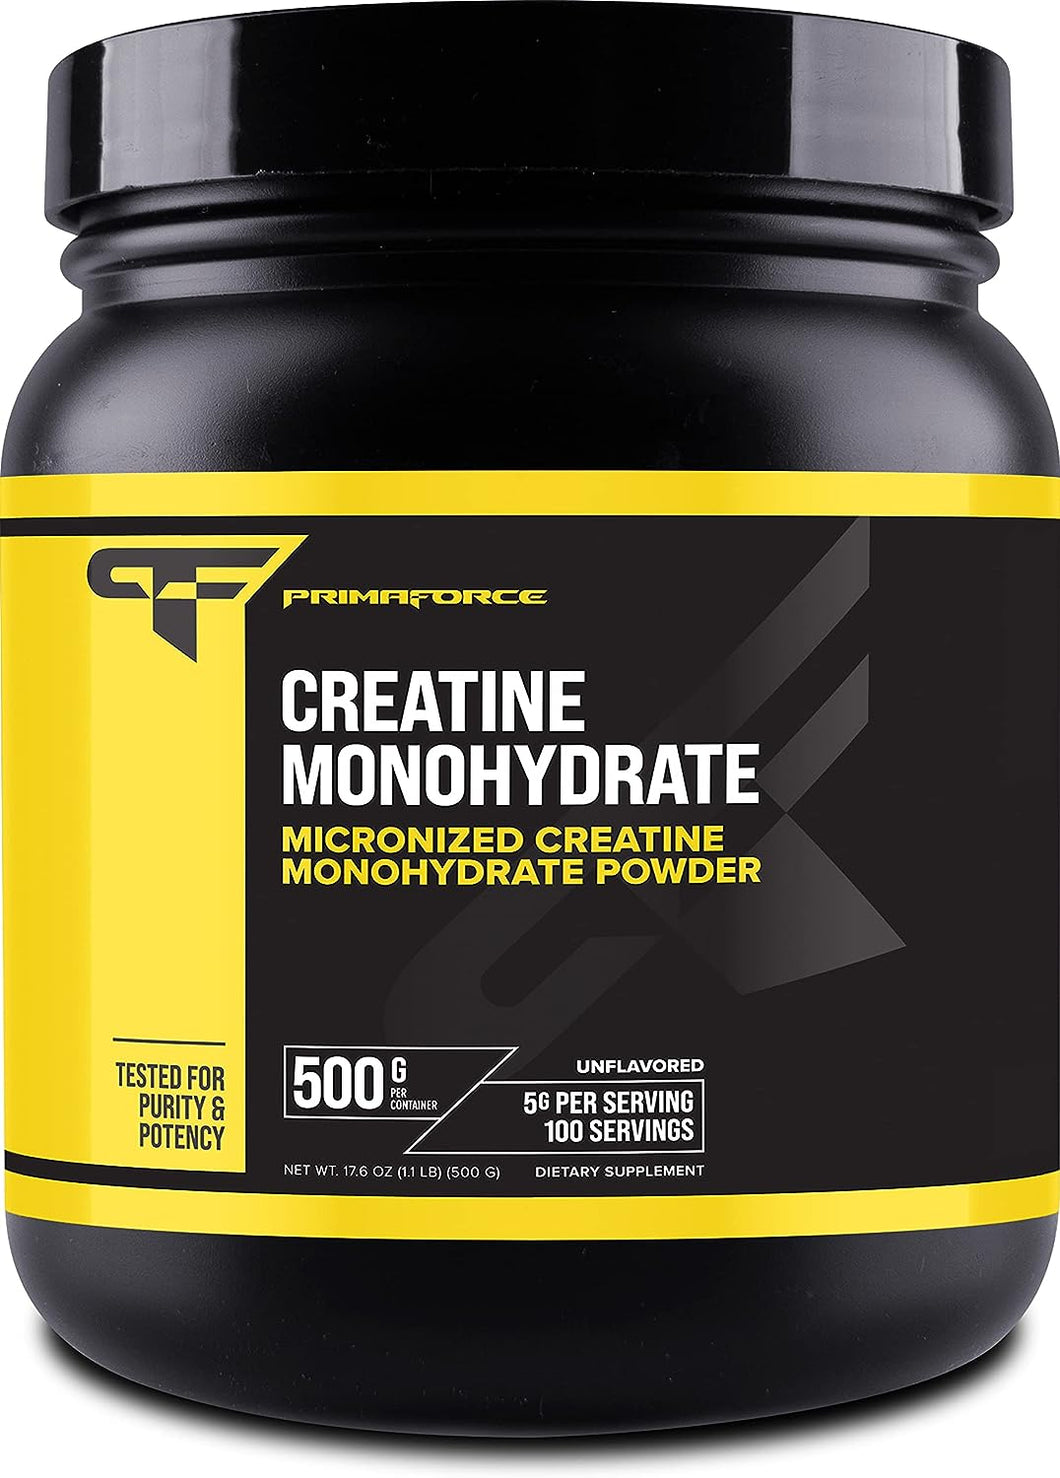 Primaforce Micronized Creatine Monohydrate Powder 500 Grams (1.1 Pounds)